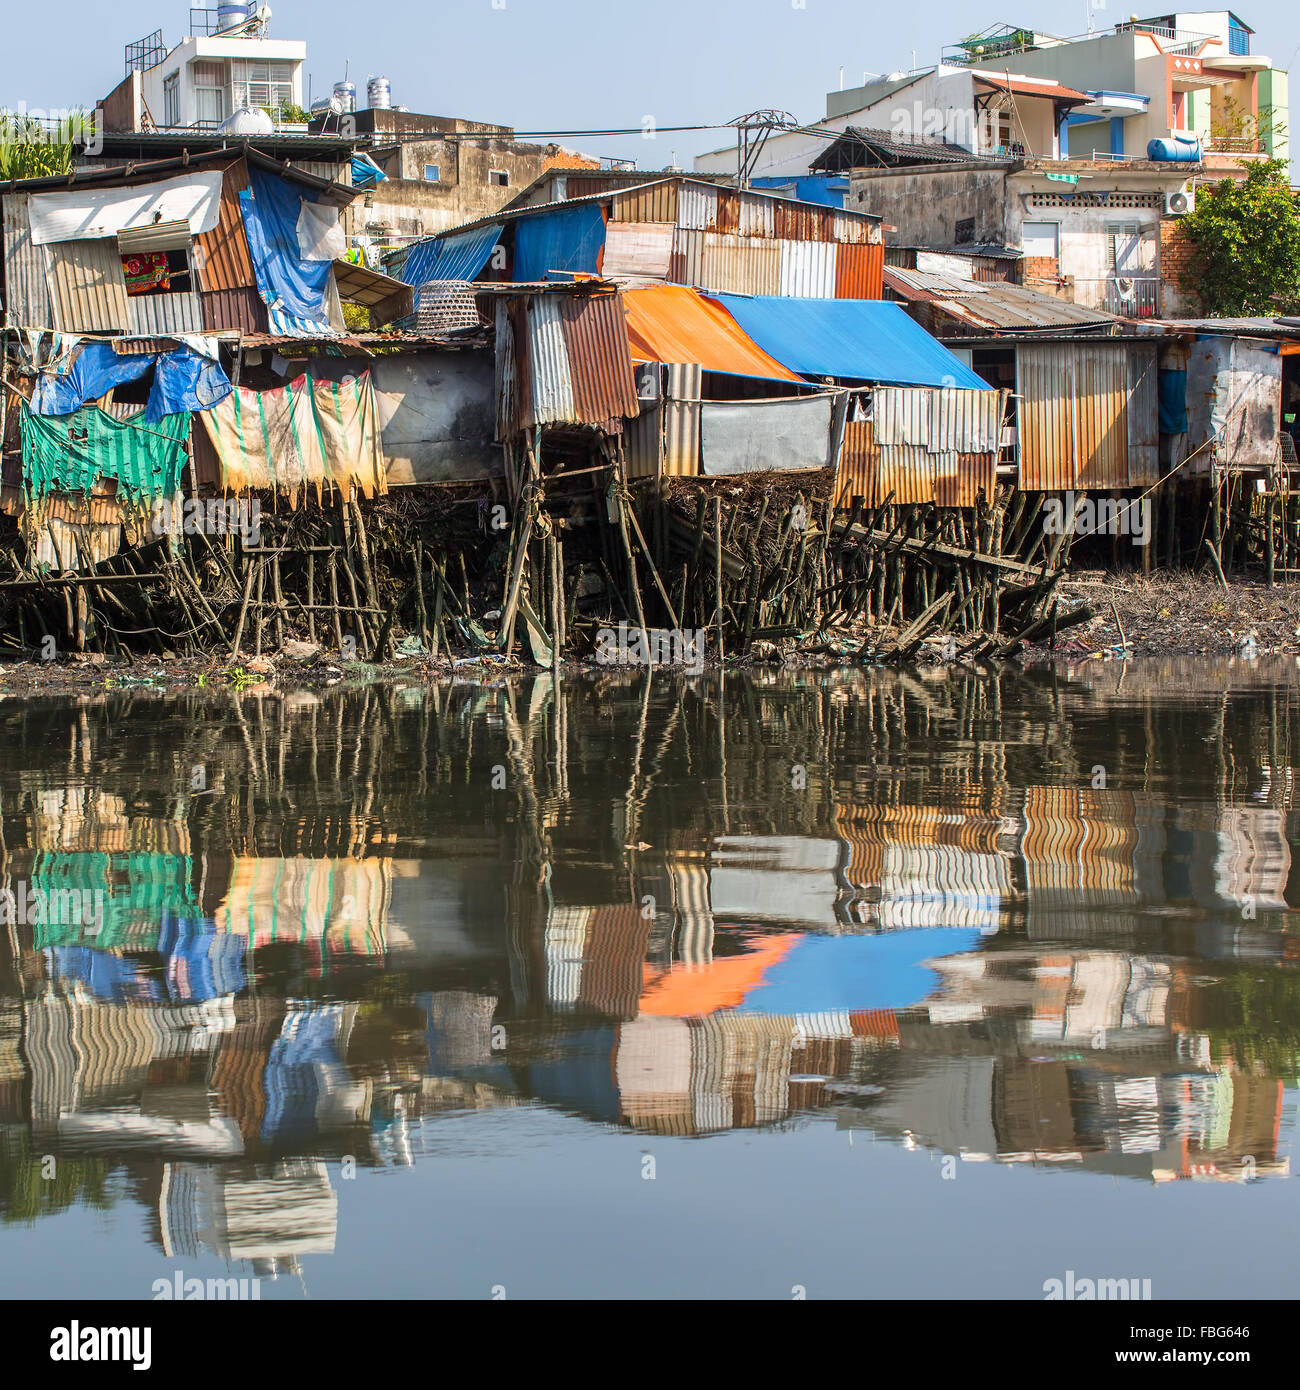 citys-slums-view-from-the-saigon-river-ho-chi-minh-city-vietnam-FBG646.jpg